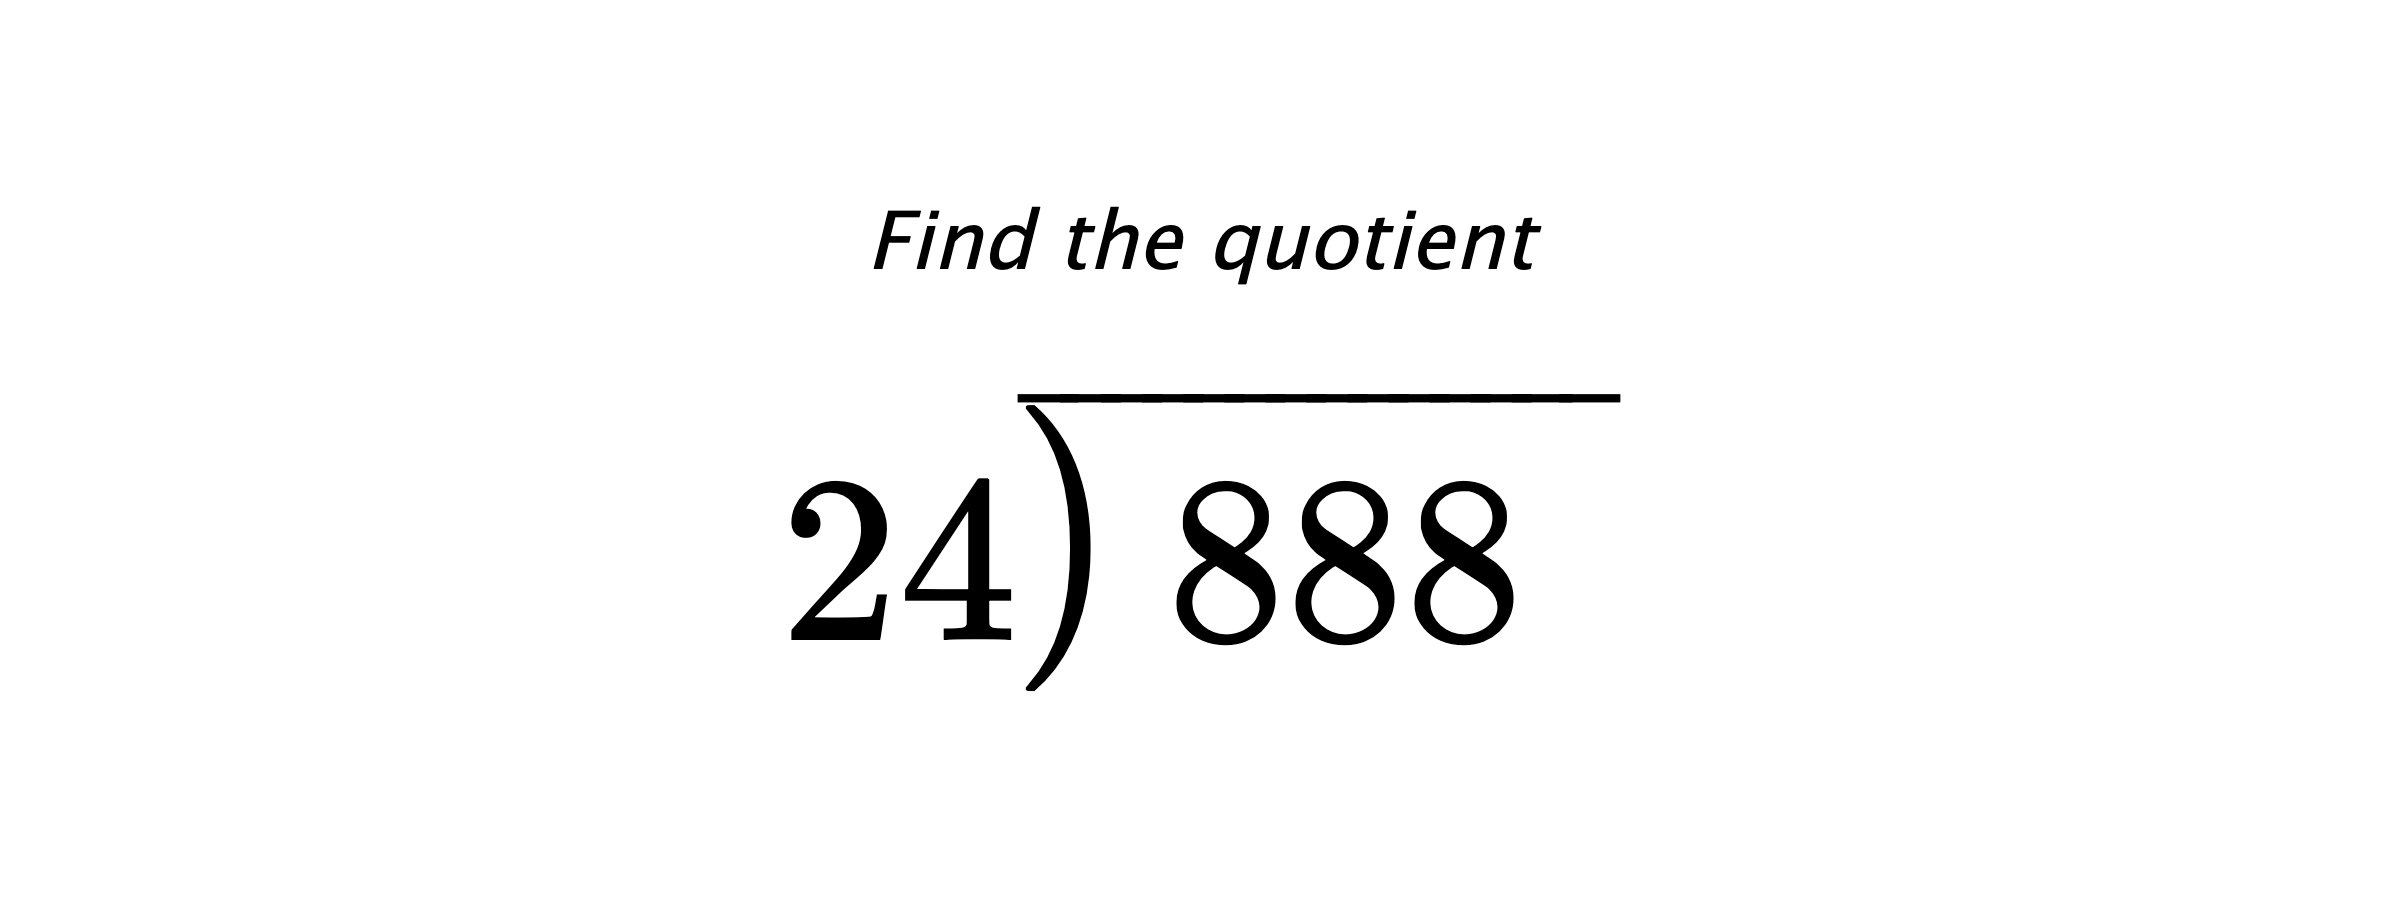 Find the quotient $ 24{\overline{\smash{\raise.3ex\hbox{$\big)$}}\,888\phantom{)}}} $